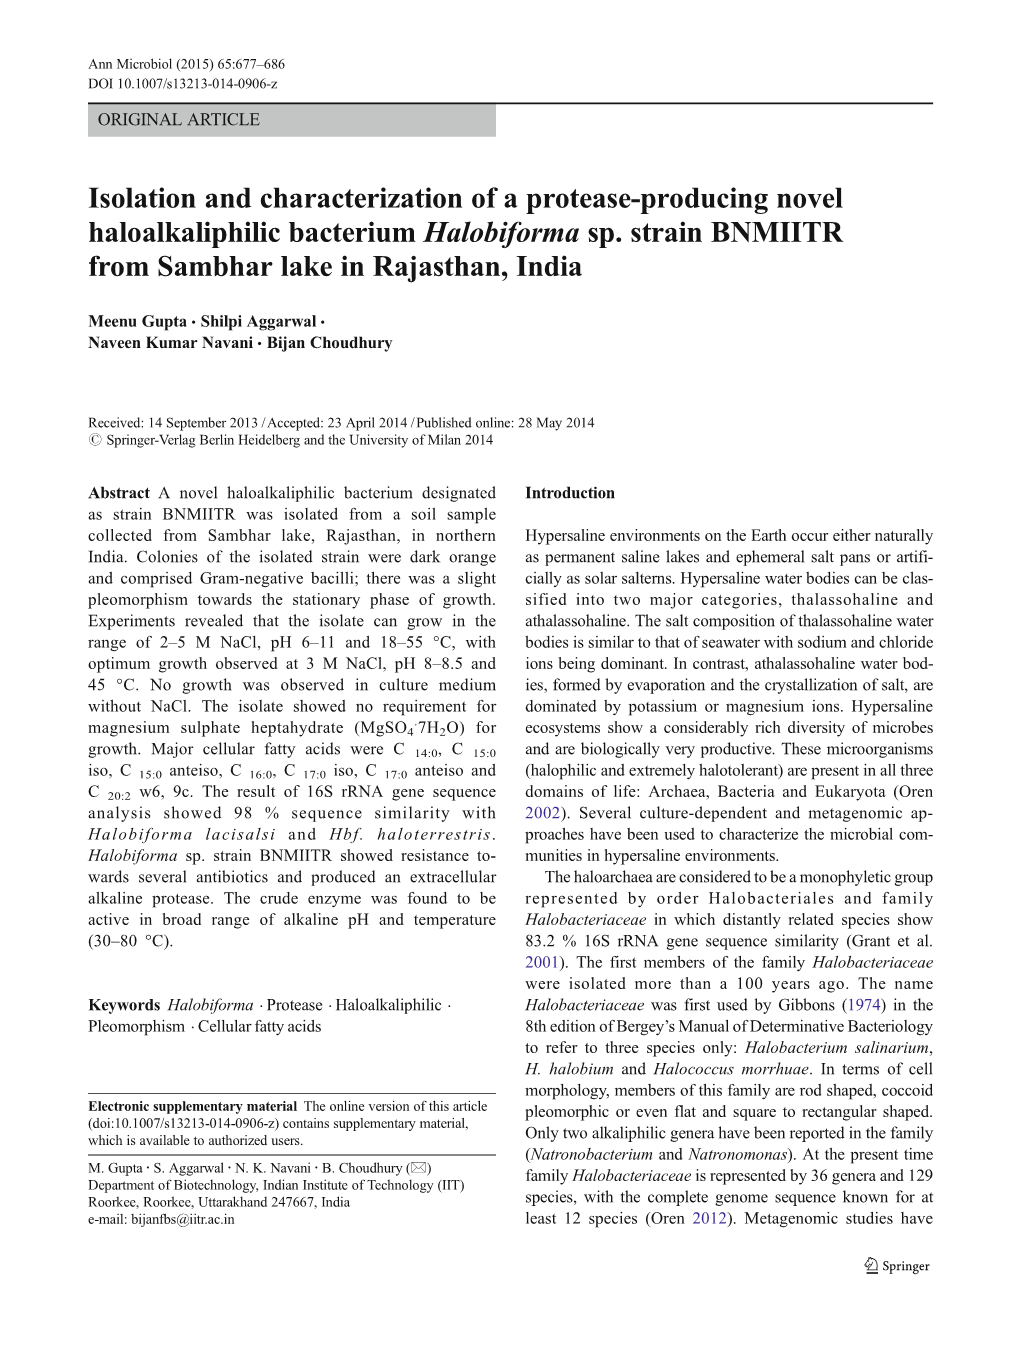 Isolation and Characterization of a Protease-Producing Novel Haloalkaliphilic Bacterium Halobiforma Sp. Strain BNMIITR from Sambhar Lake in Rajasthan, India